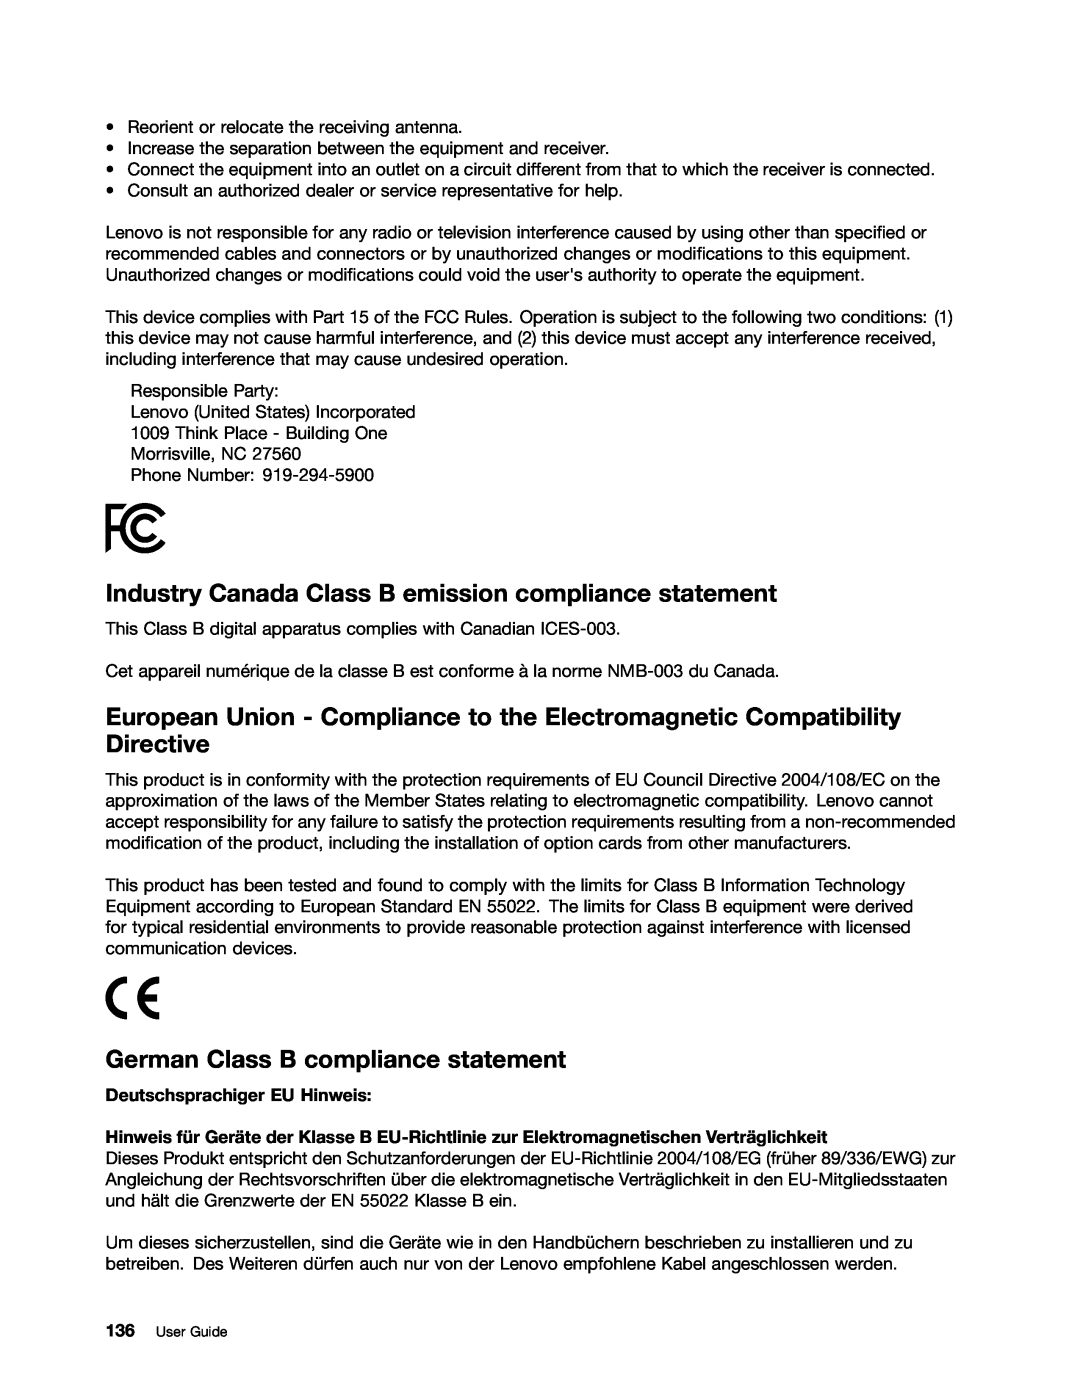 Lenovo X131E manual Industry Canada Class B emission compliance statement, German Class B compliance statement 